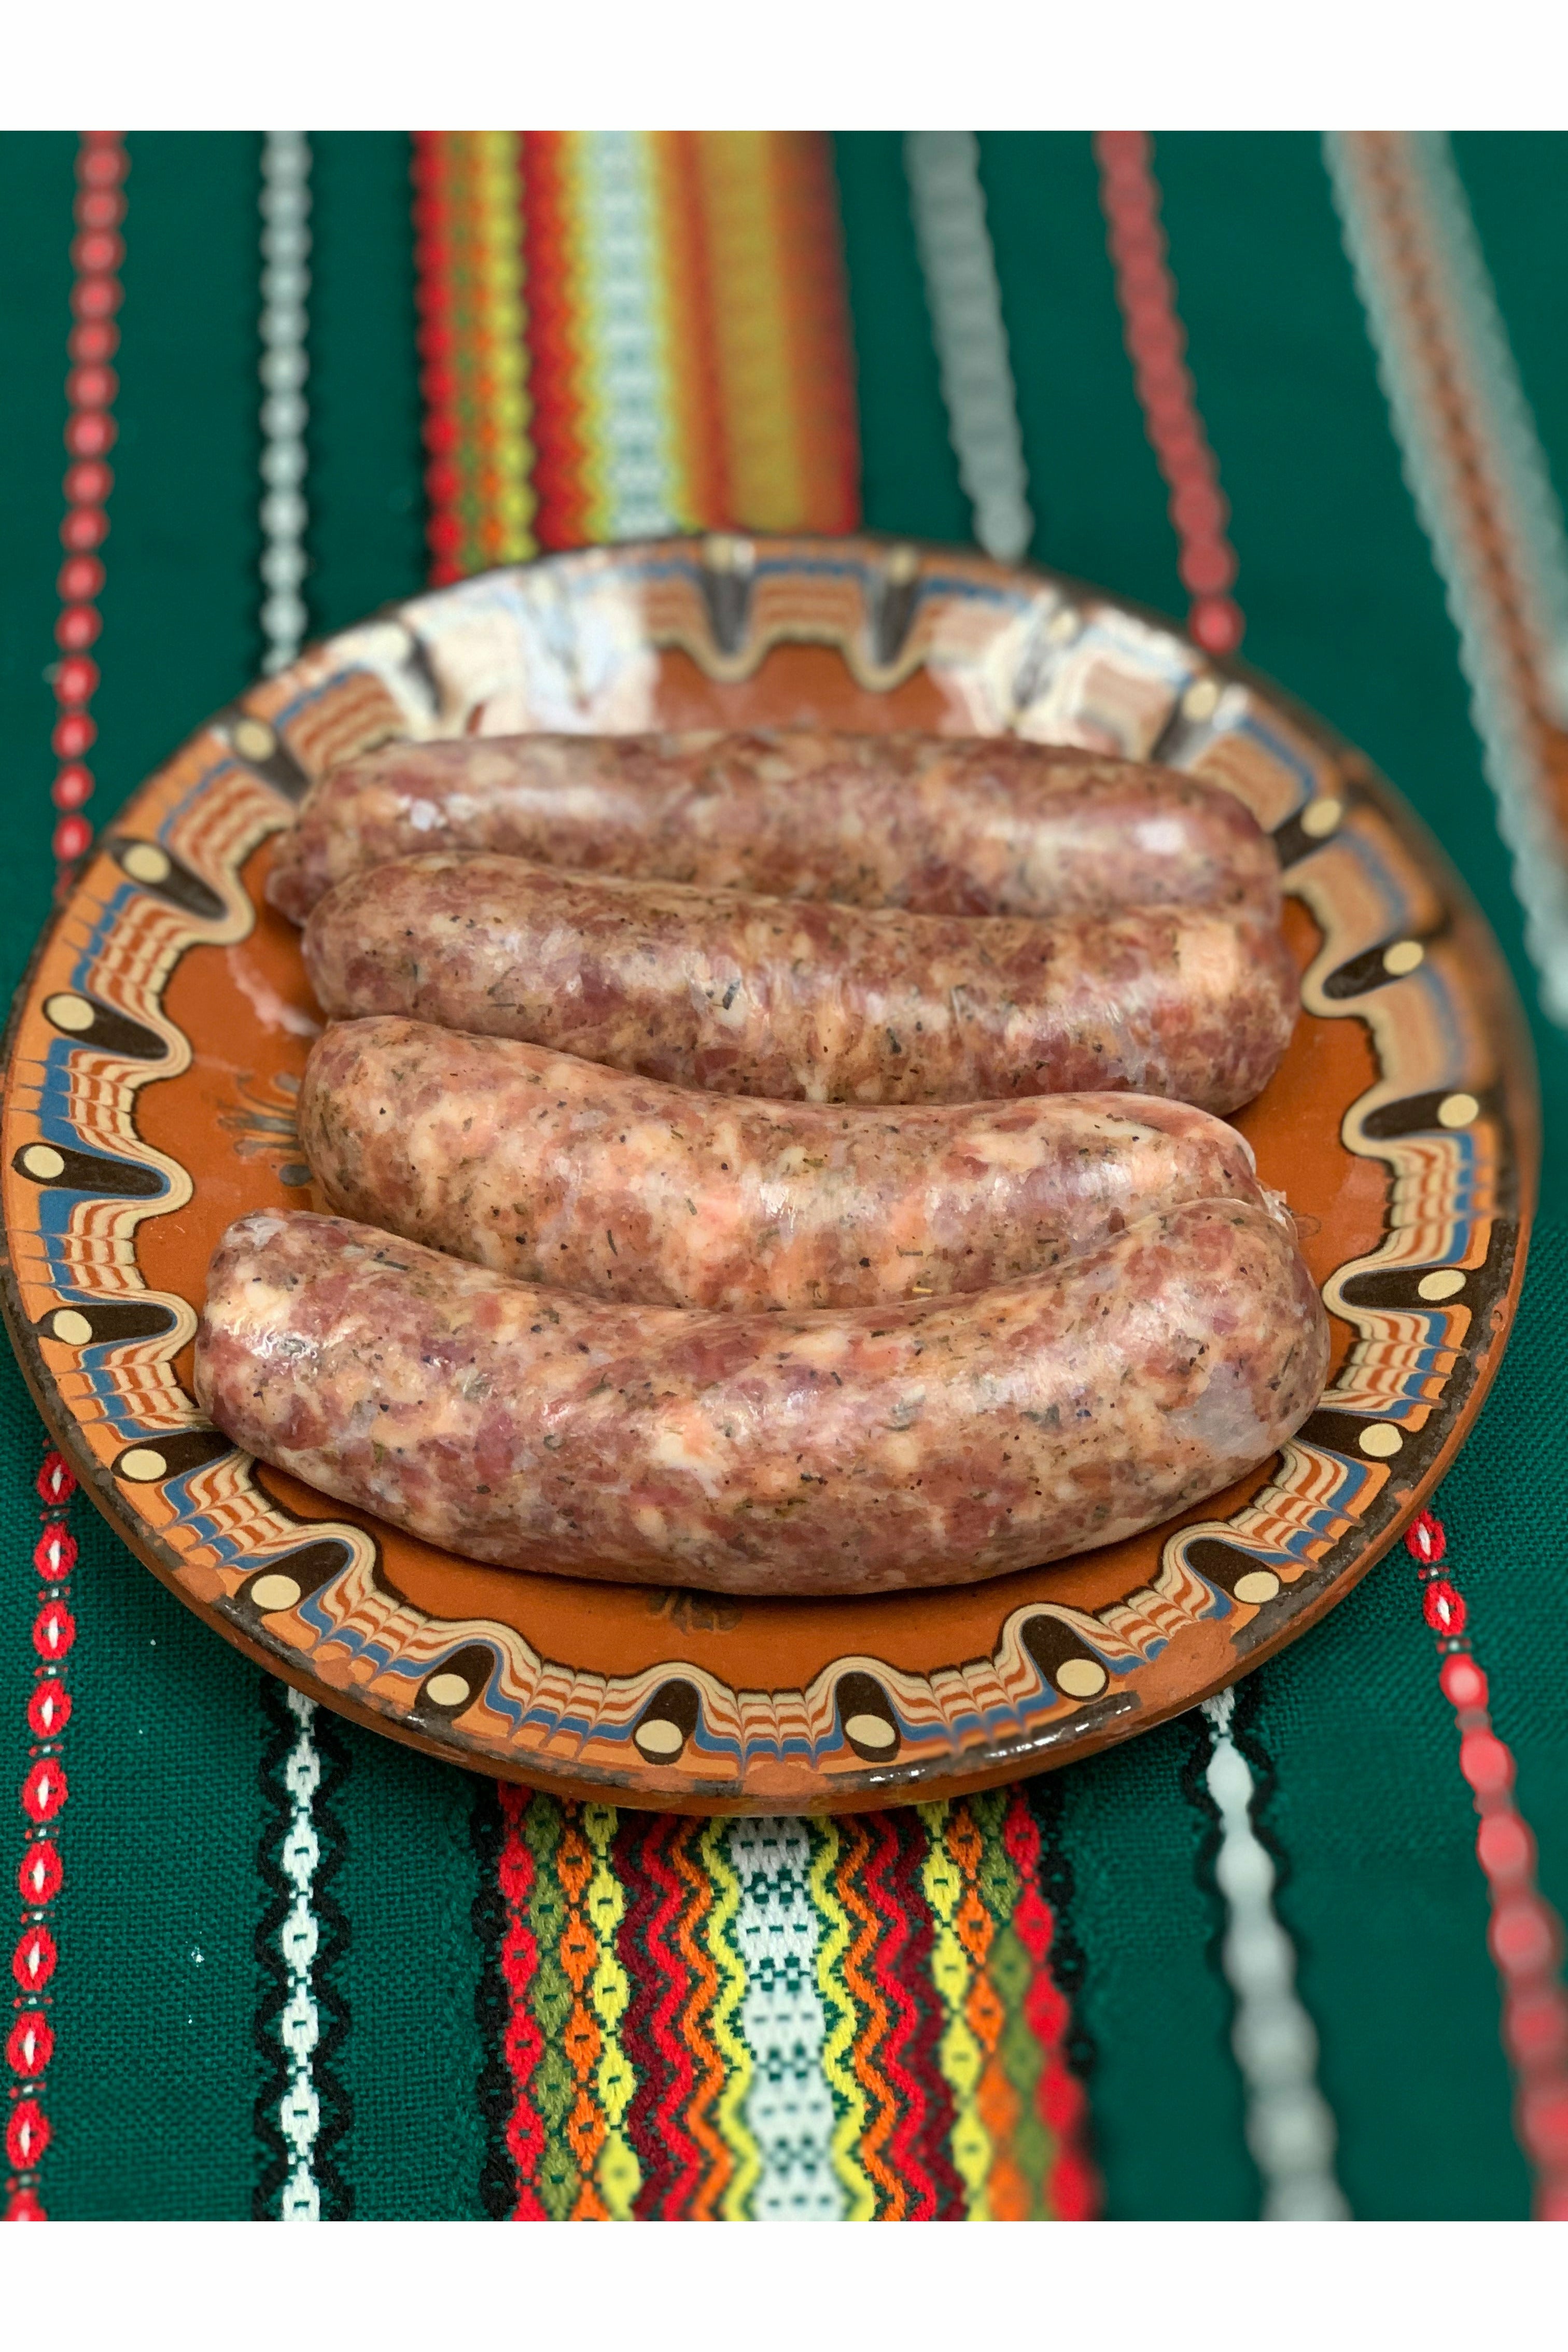 Selska Nadenica - Bulgarian Country Sausage